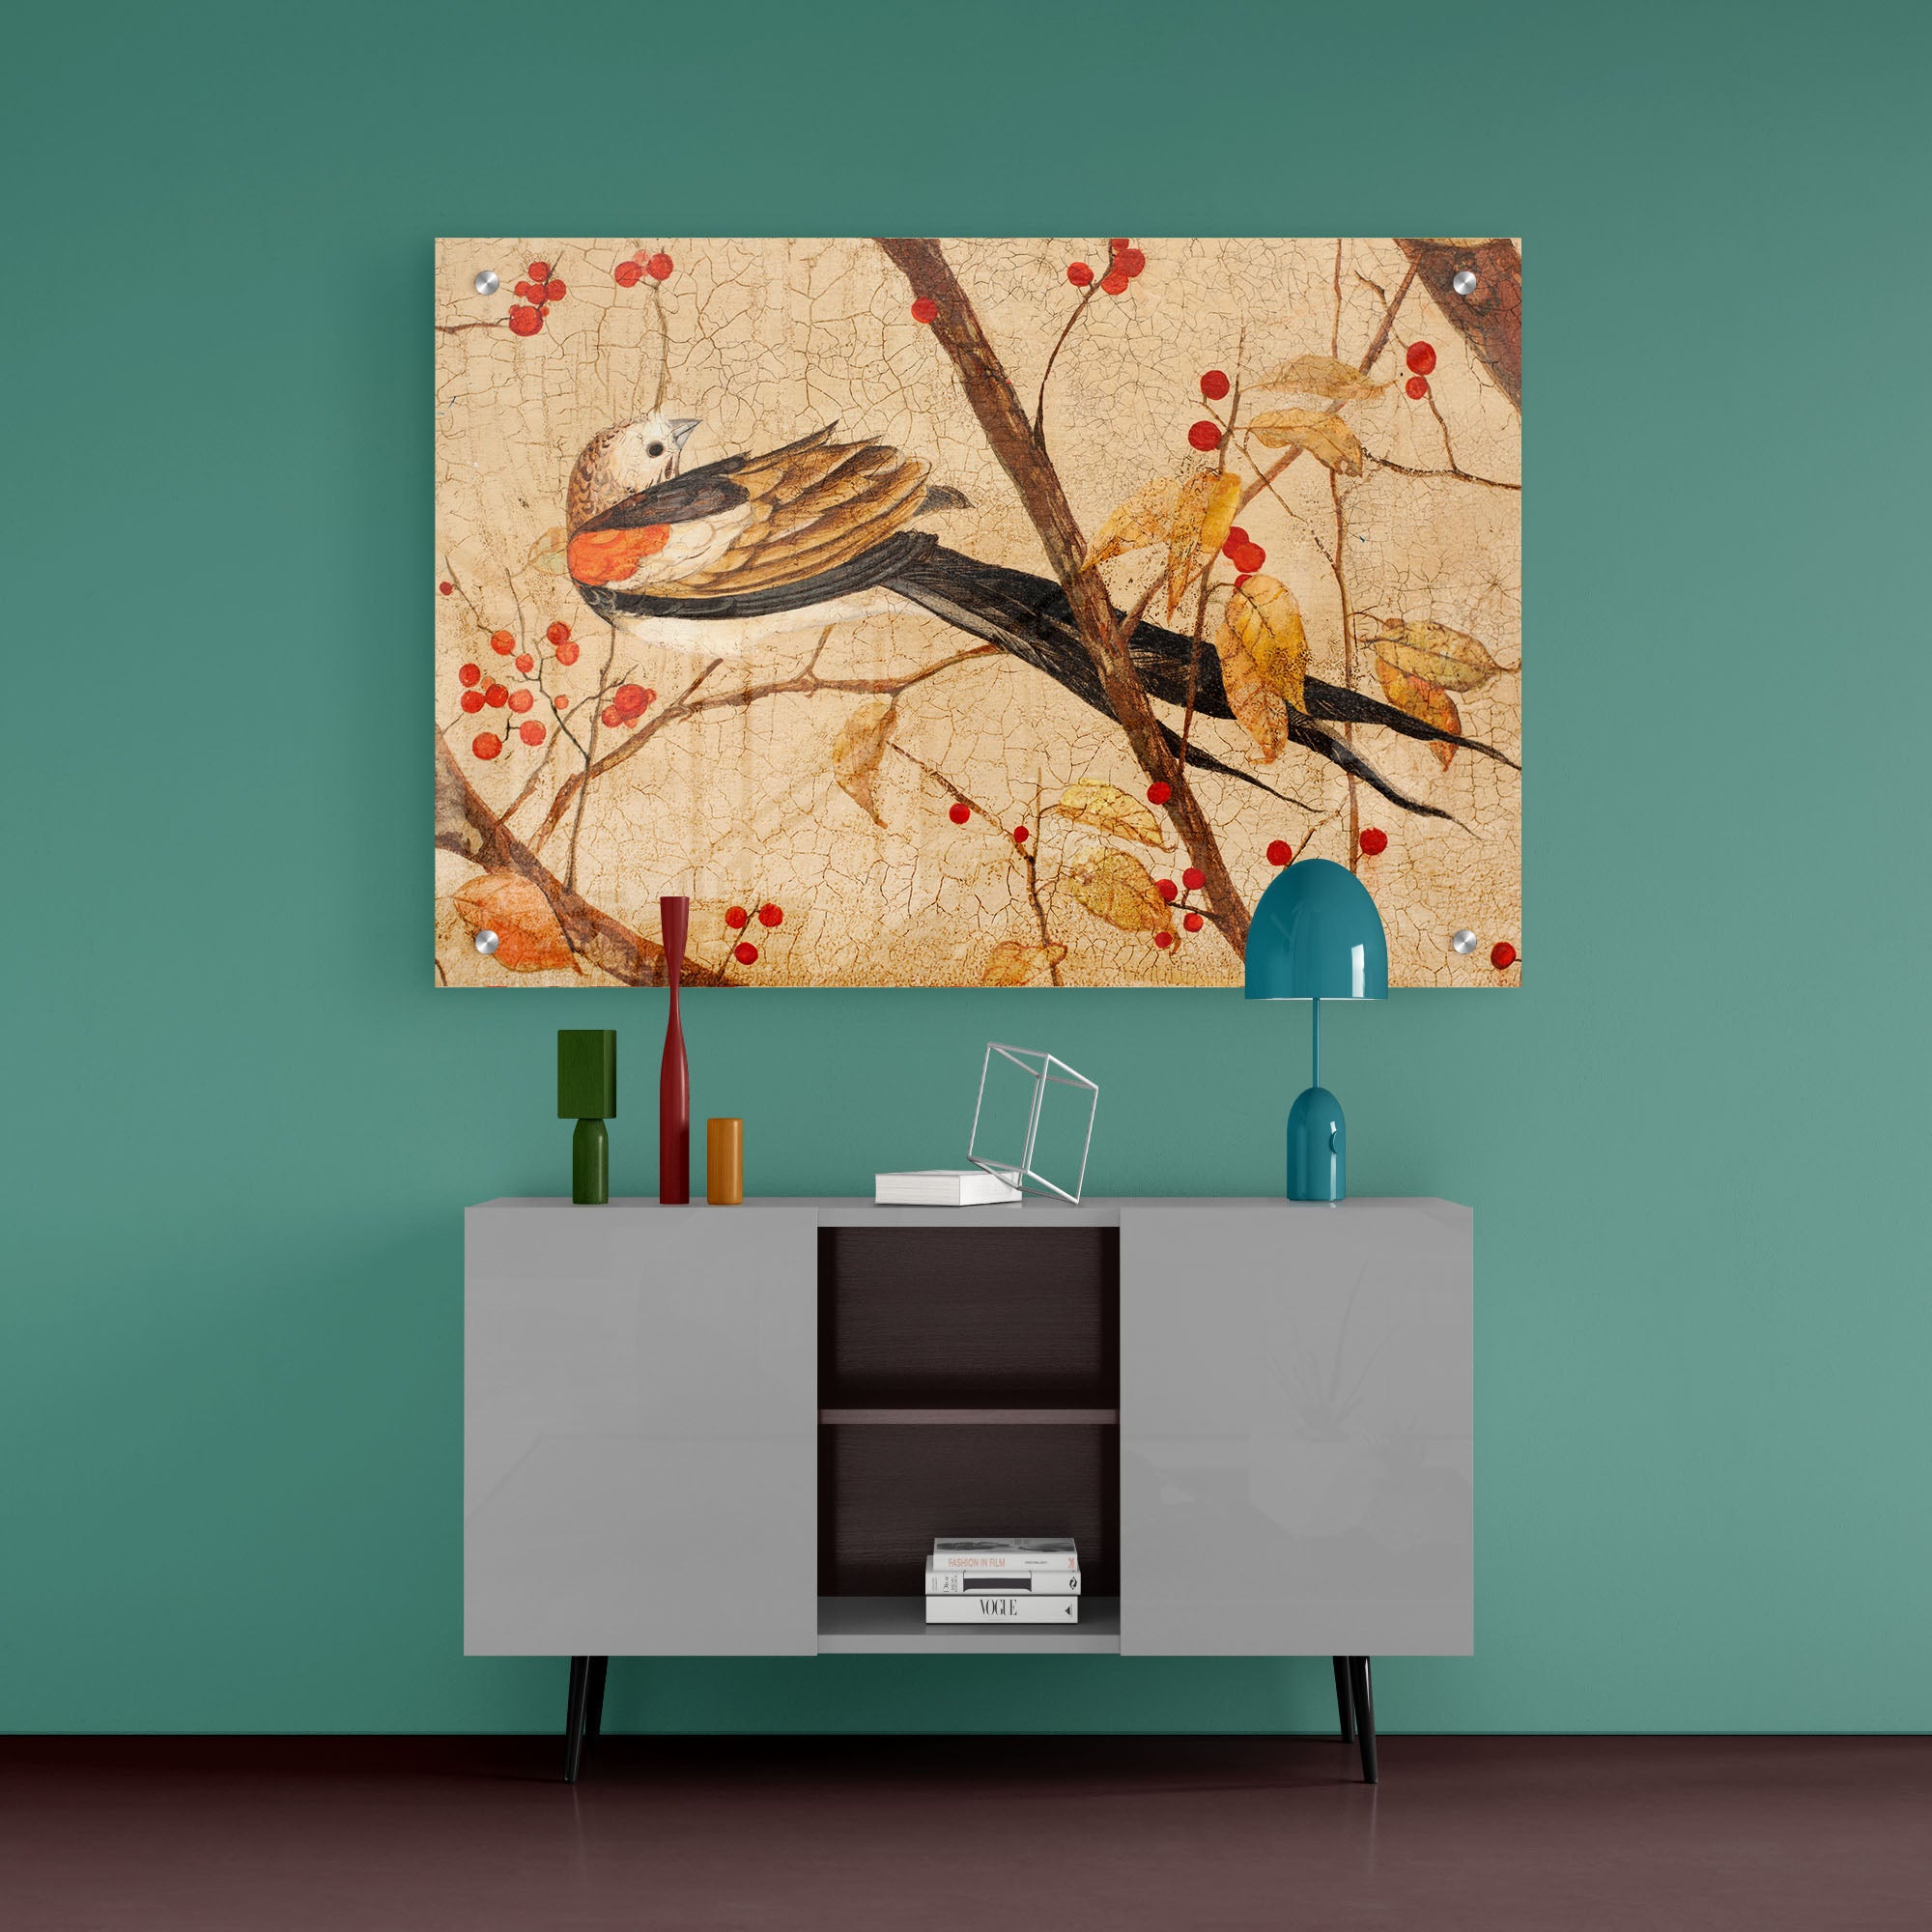 Abstract Bird Acrylic Wall Painting